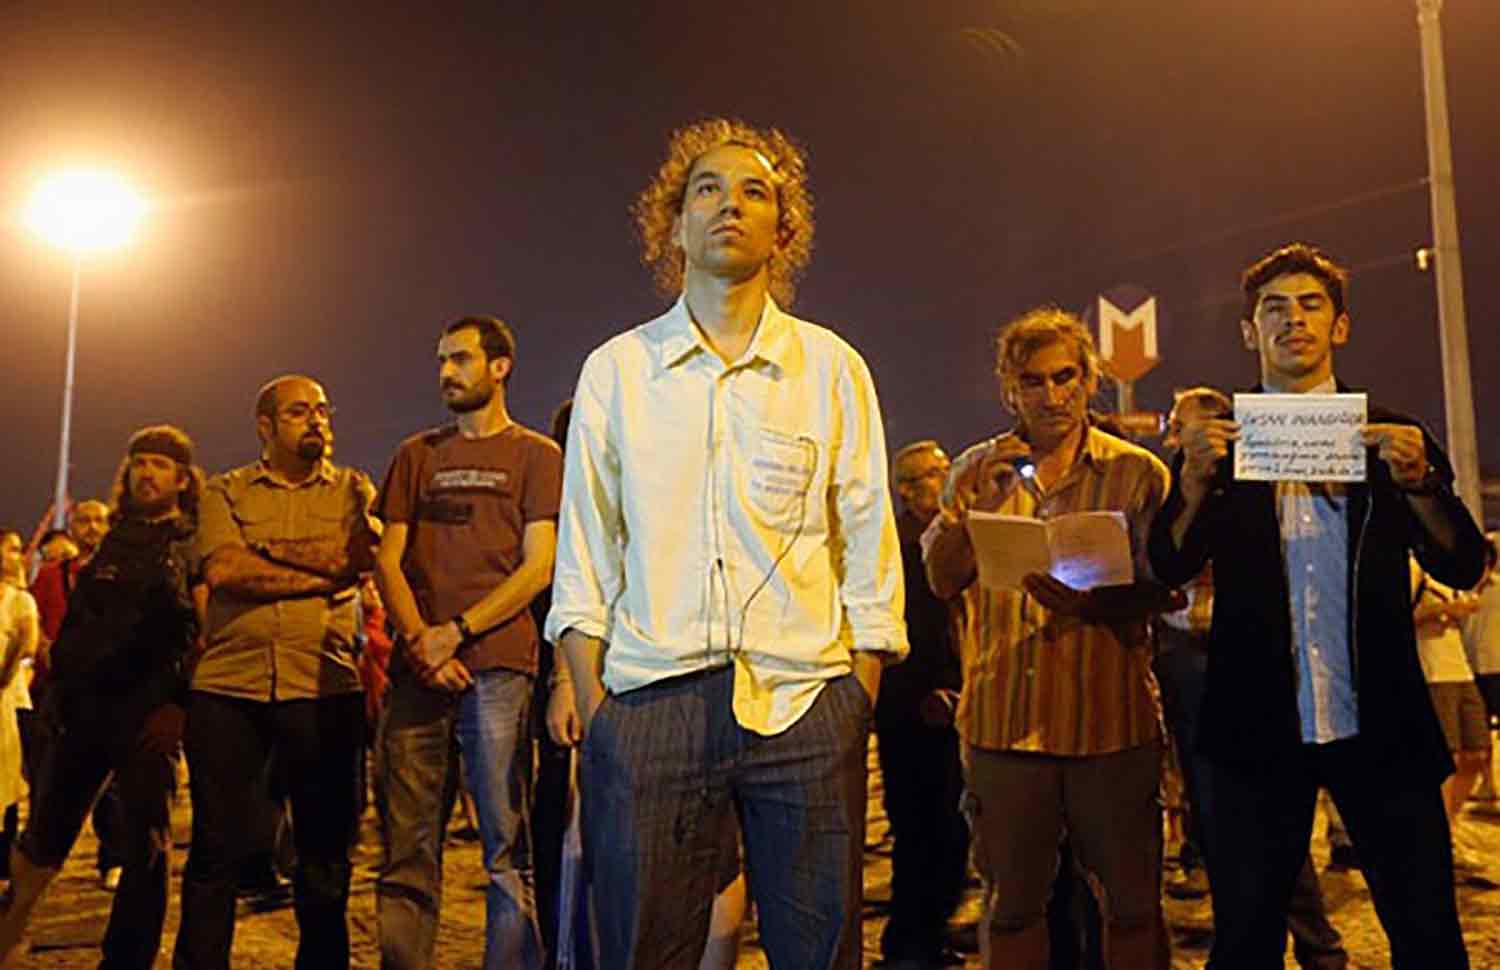 The standing man – Erdem Gündüz on Taksim Square in Istanbul during occupations in 2013.